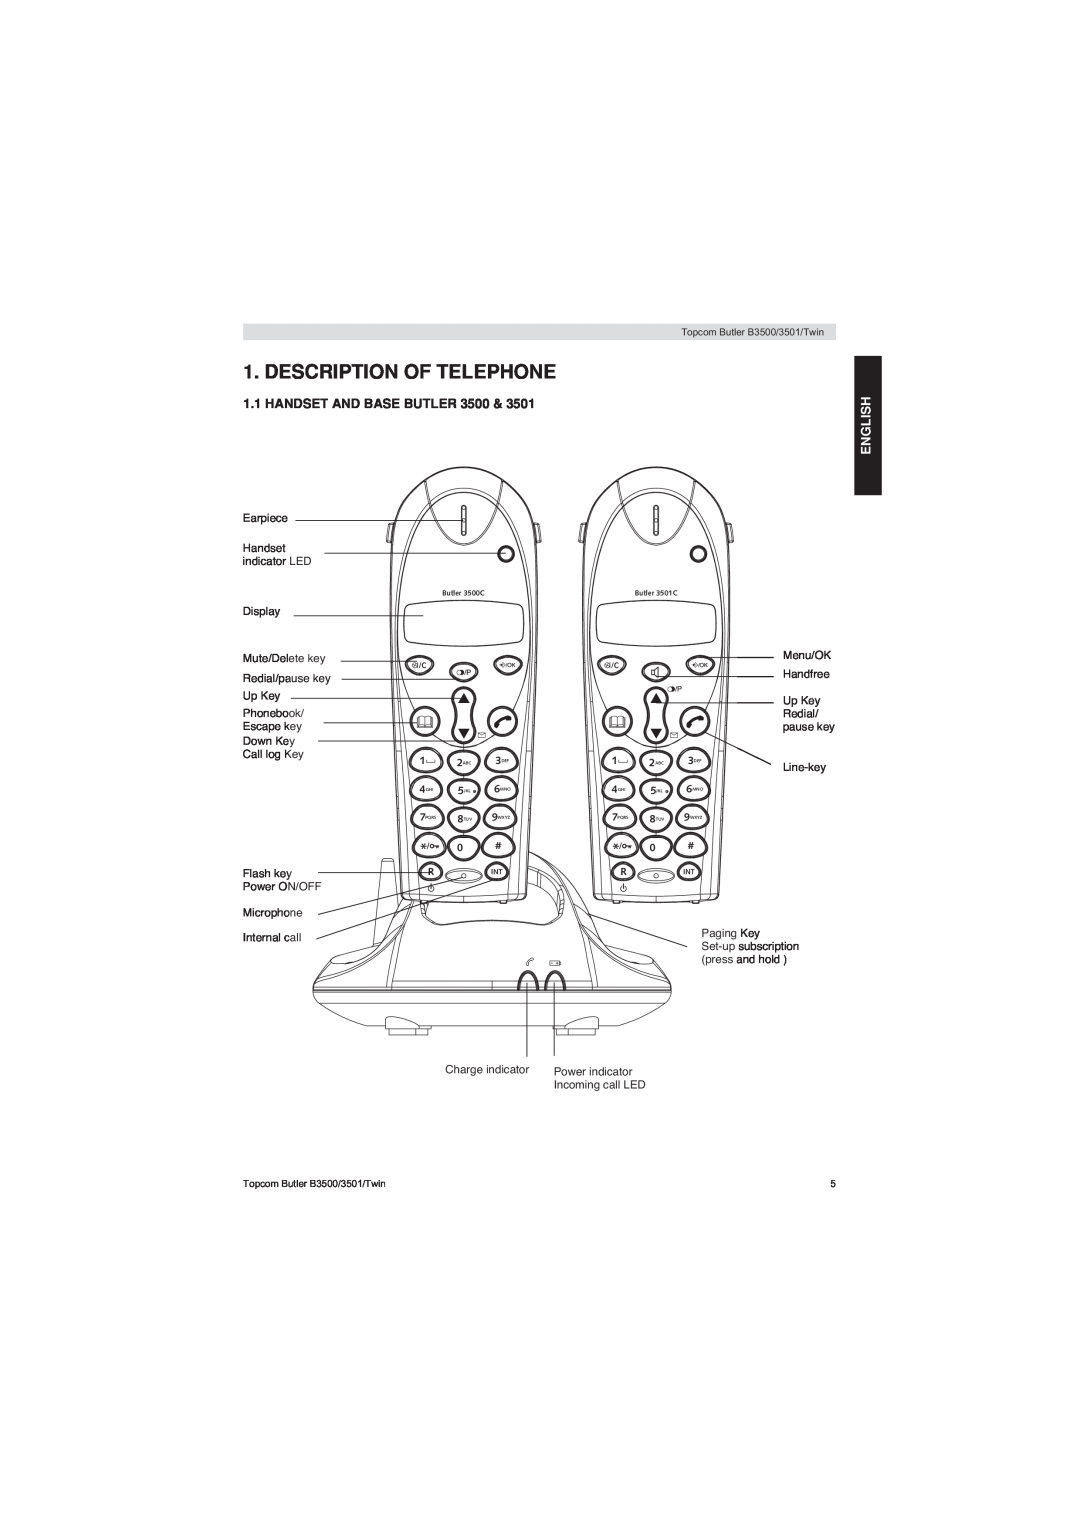 Topcom manual Description Of Telephone, HANDSET AND BASE BUTLER 3500, English, 1 2ABC3DEF 